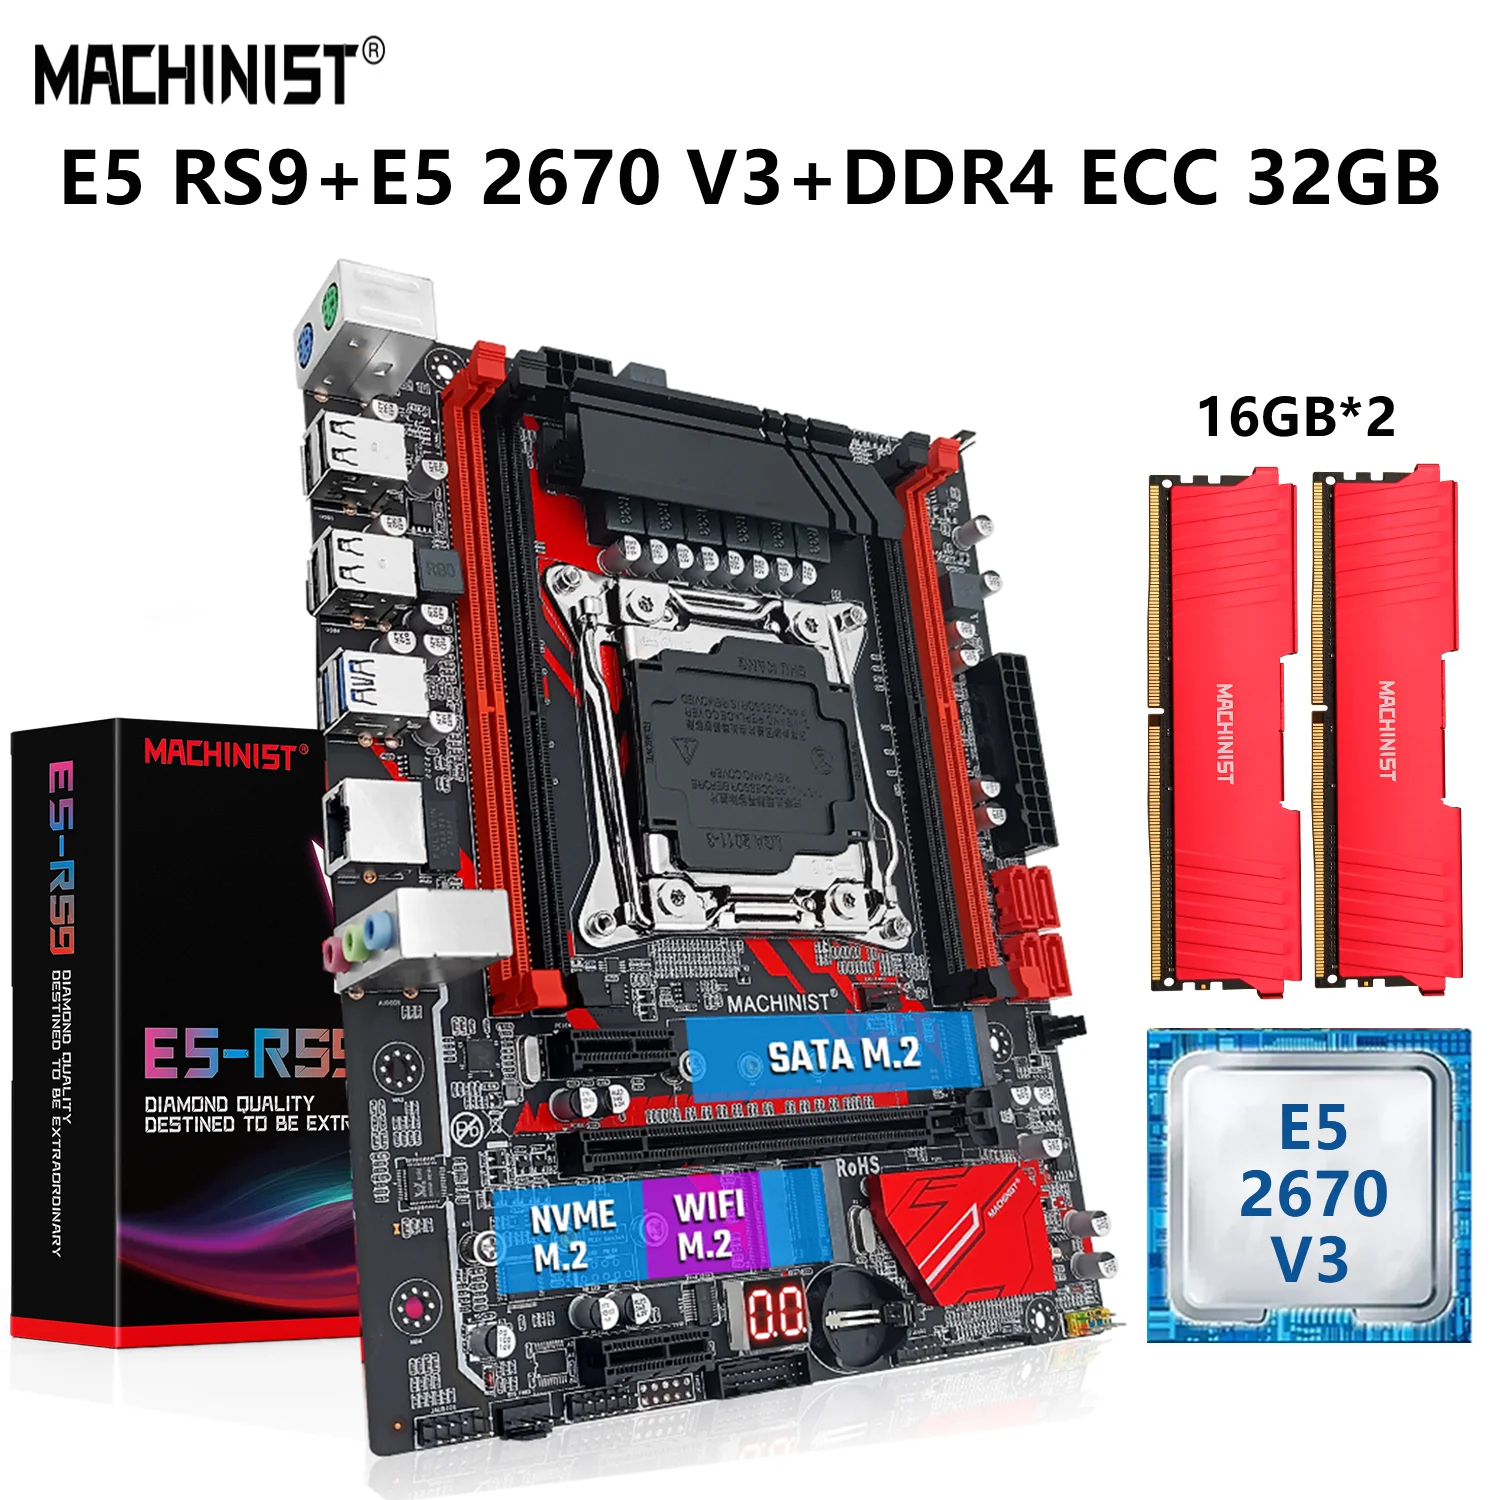 

MACHINIST RS9 X99 Motherboard Set With Kit Xeon E5 2670 V3 CPU Processor LGA 2011-3 32G=2*16G DDR4 ECC RAM Memory NVME SATA M.2